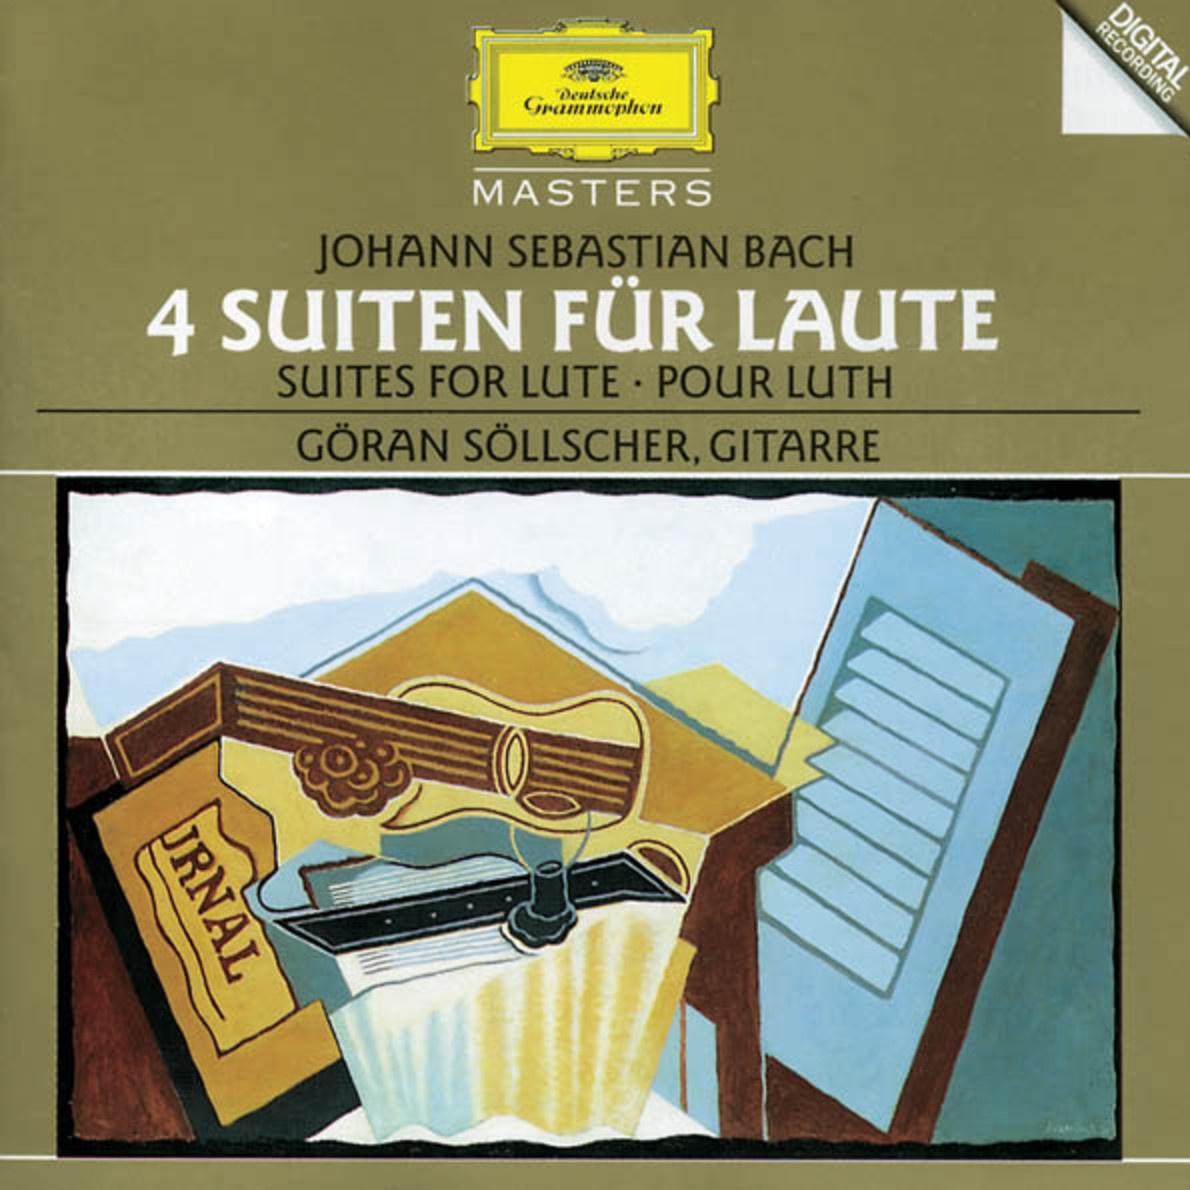 Suite in G minor, BWV 995 - Allemande